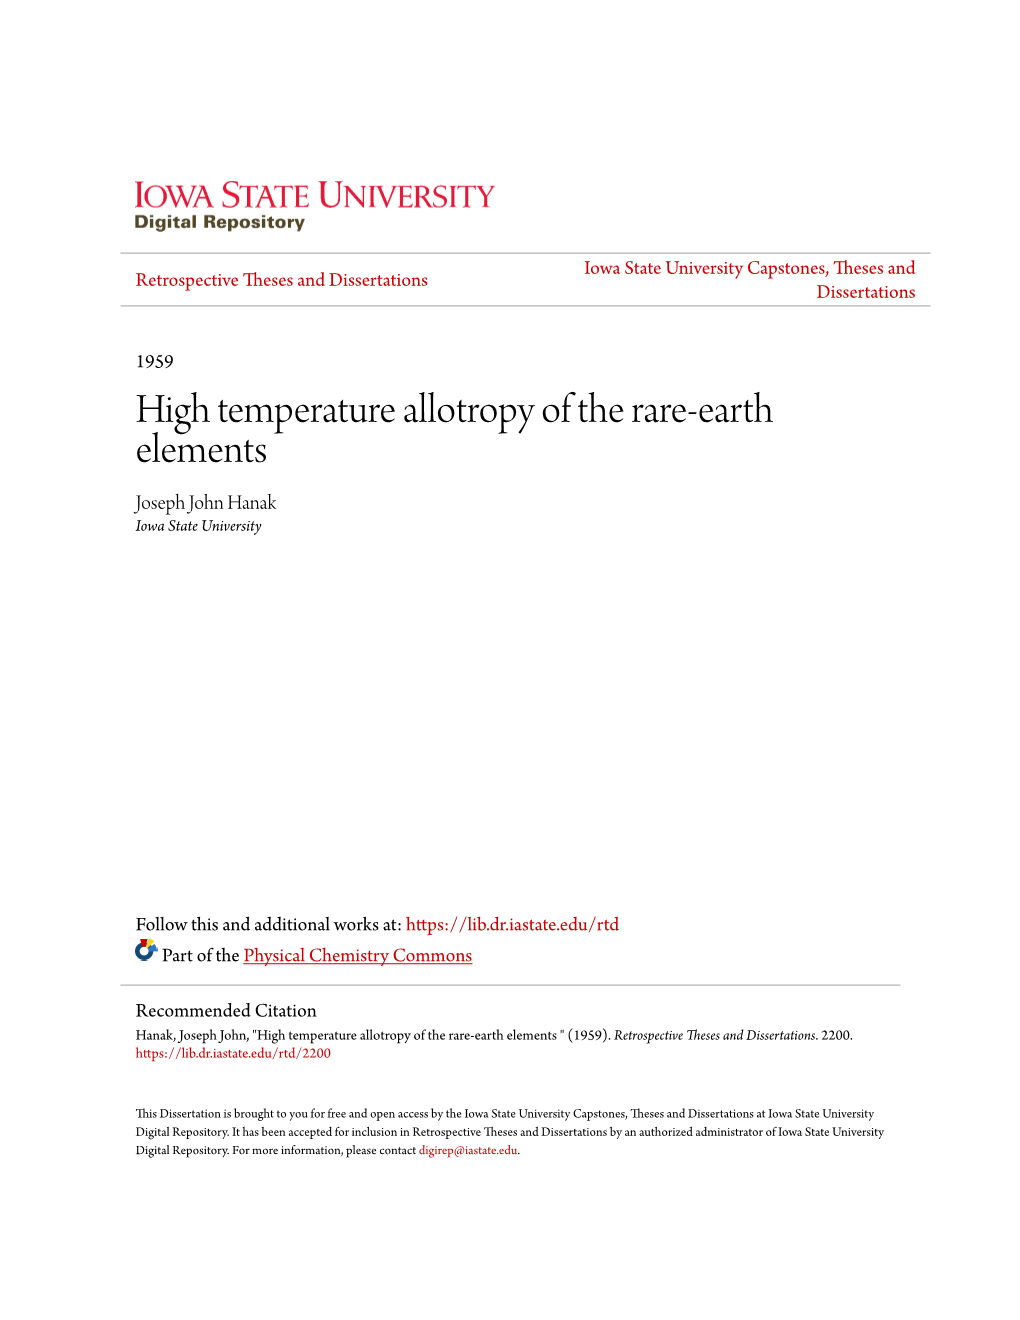 High Temperature Allotropy of the Rare-Earth Elements Joseph John Hanak Iowa State University